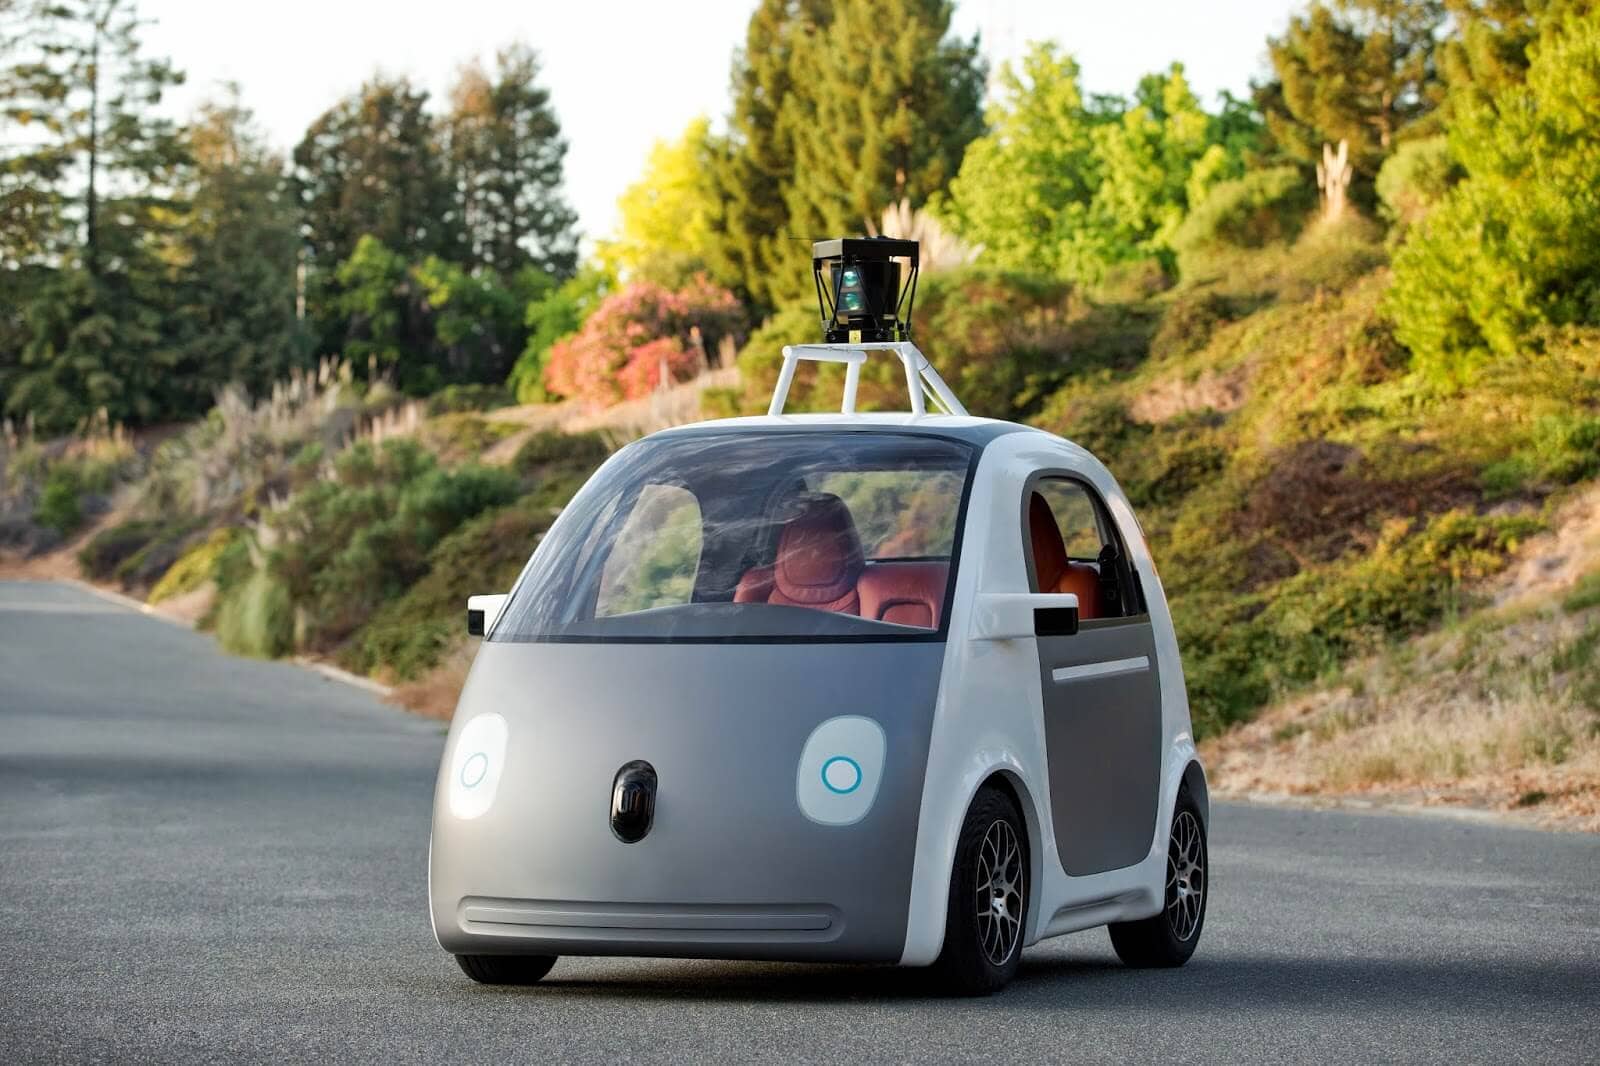 Google's self-driving car Waymo